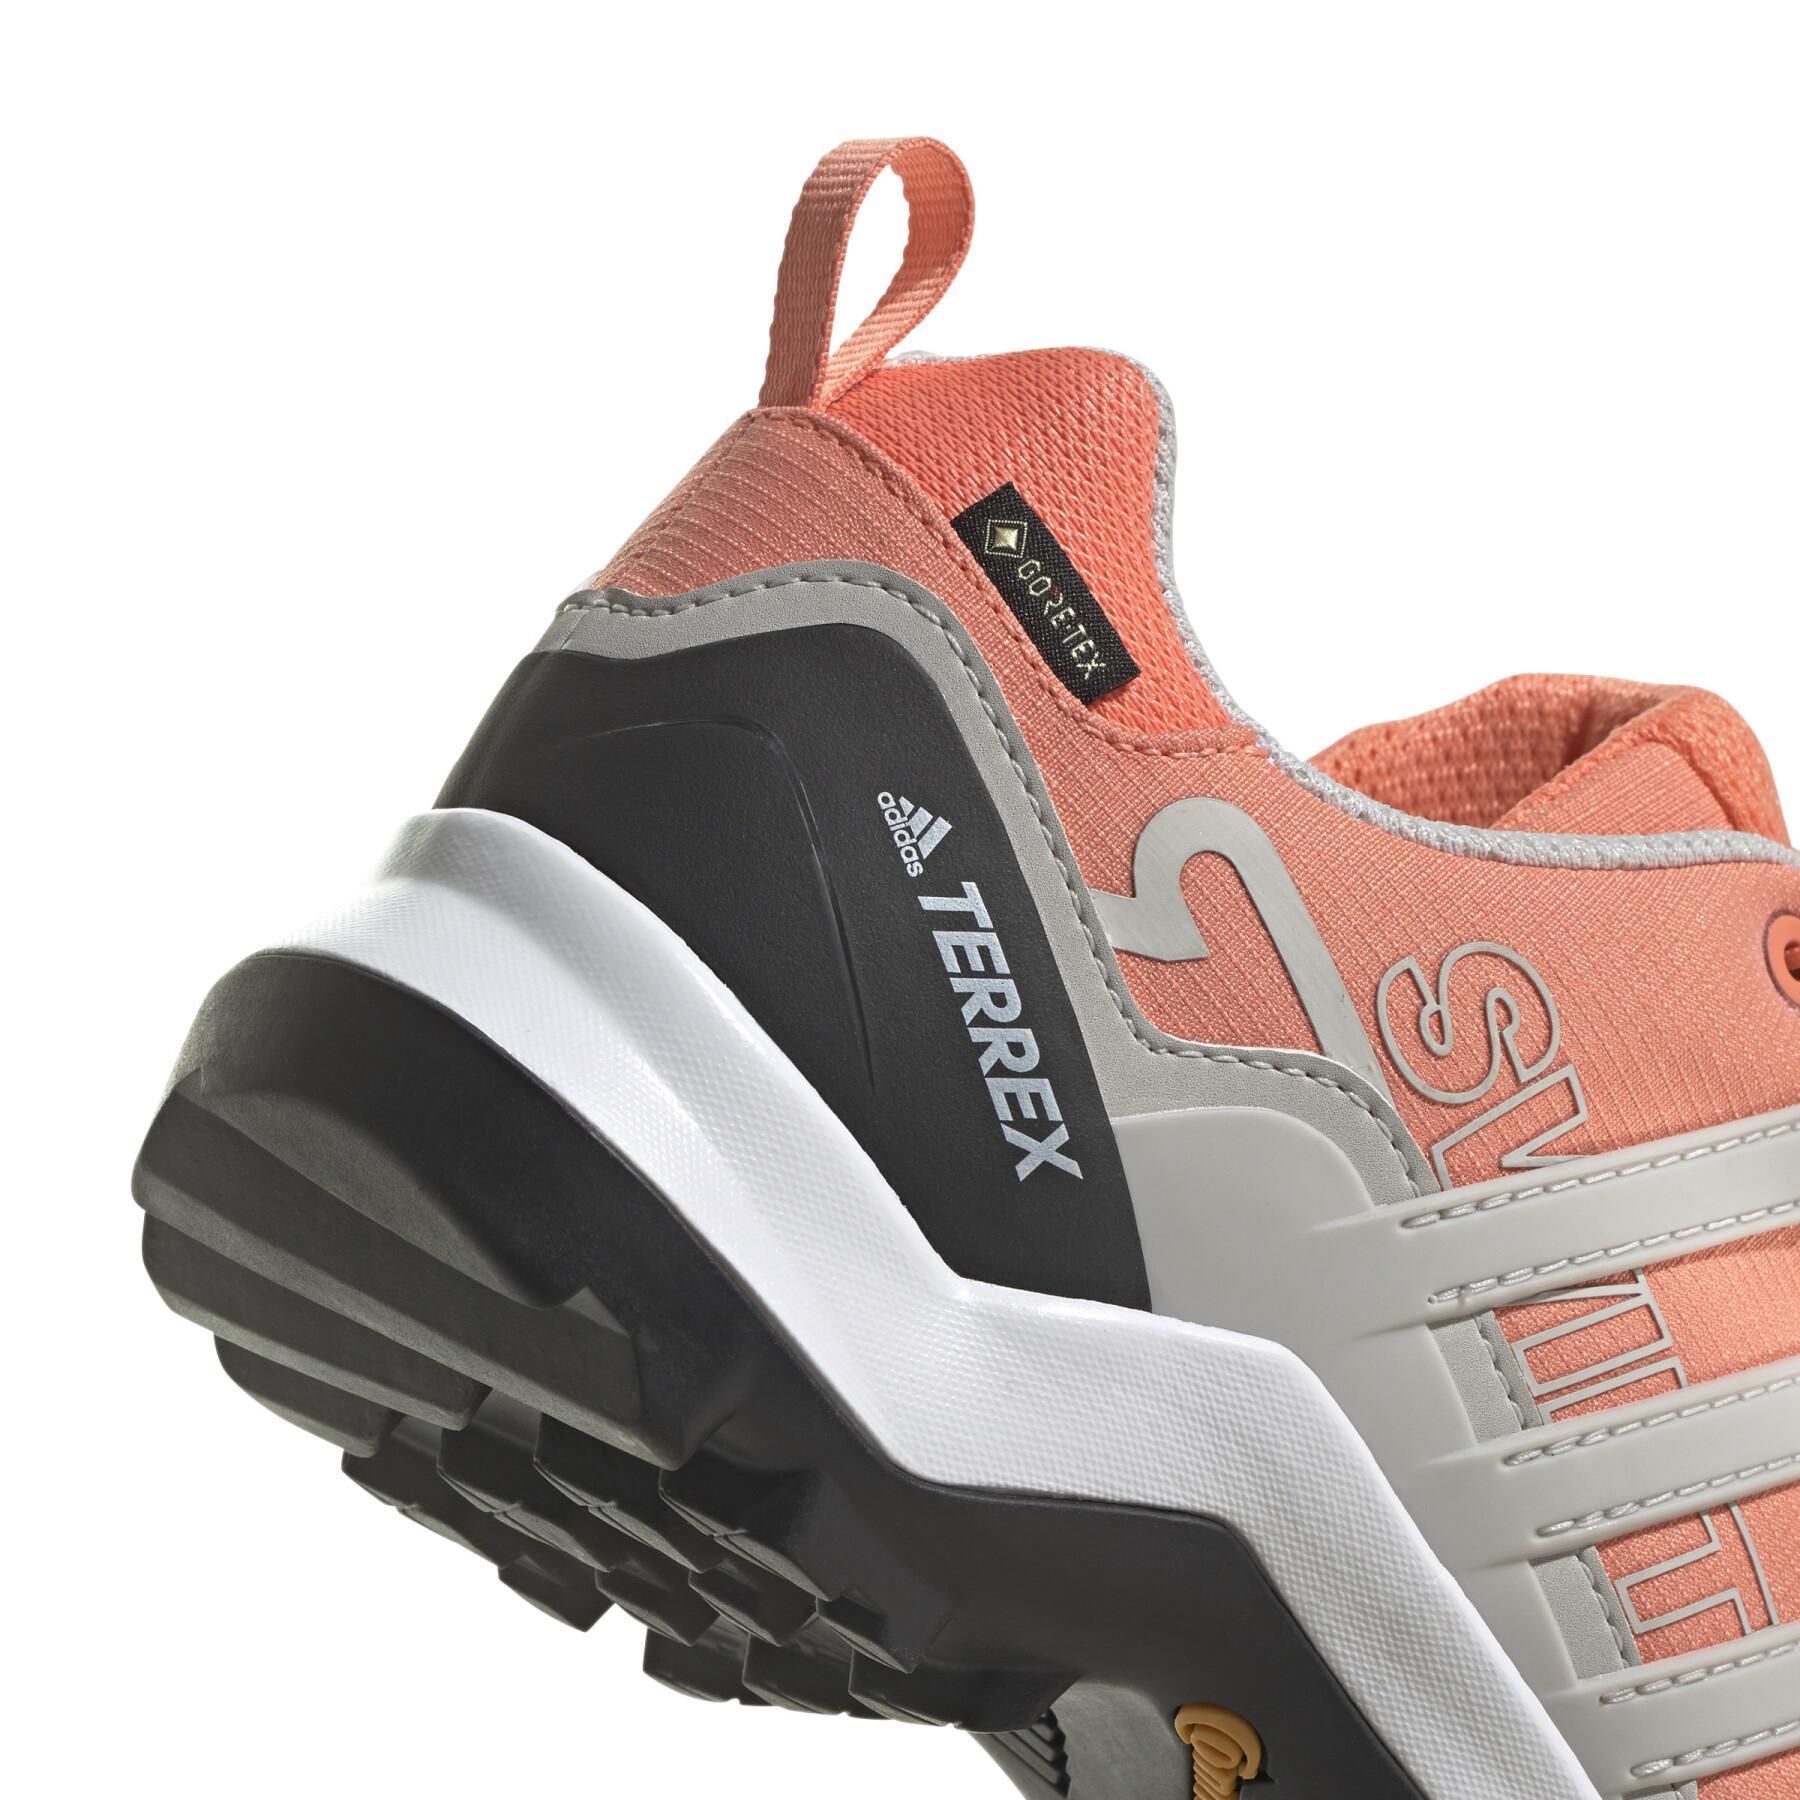 Women's hiking shoes adidas Terrex Swift R2 GTX